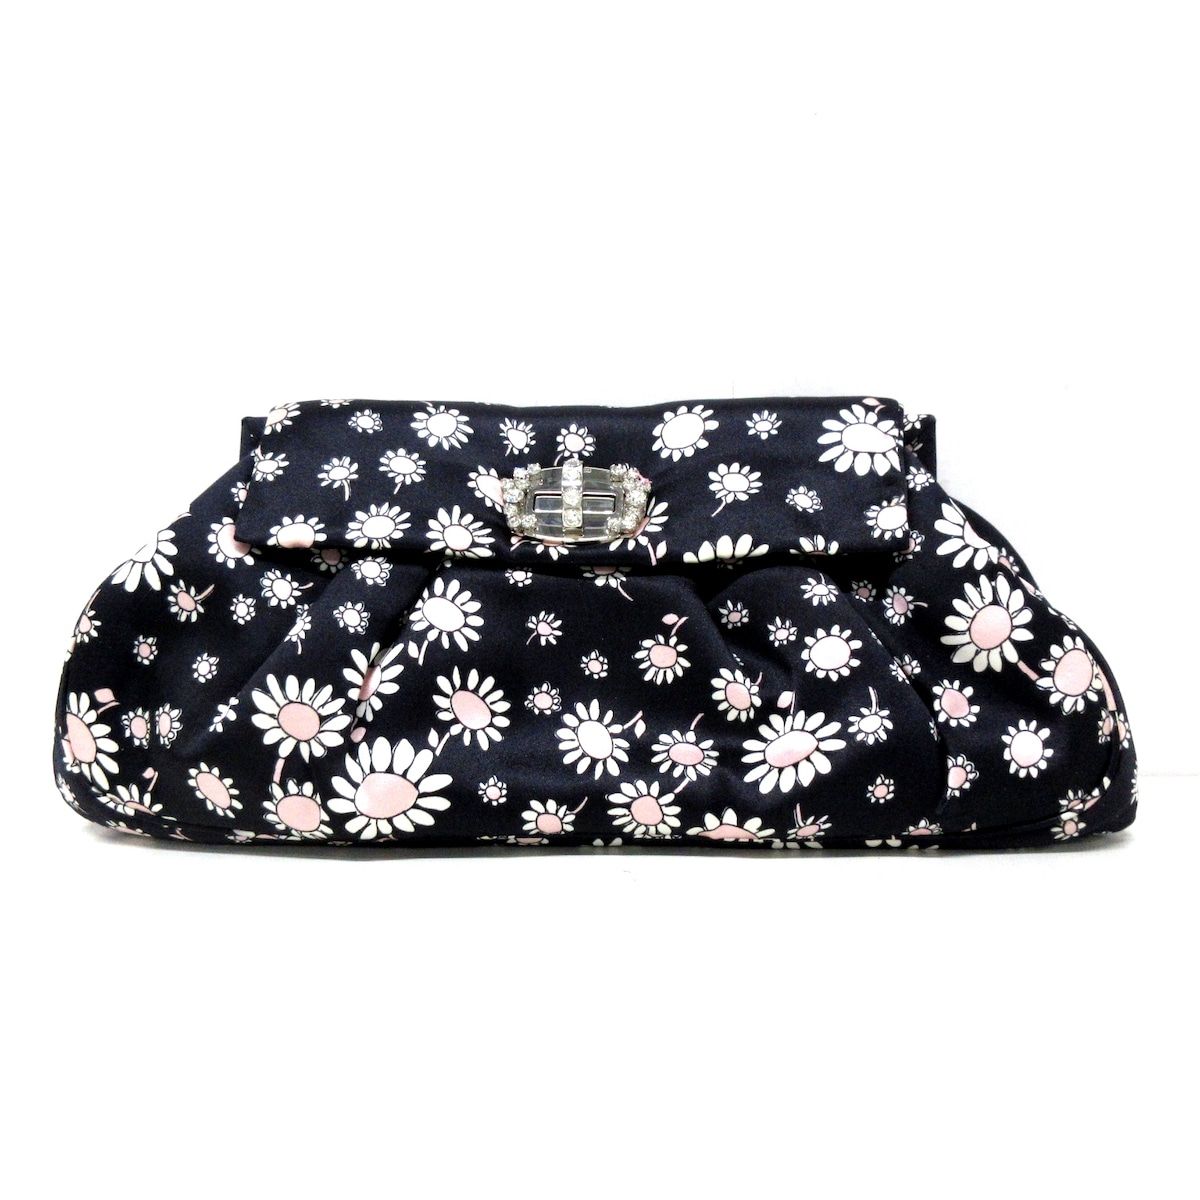 miumiu(ミュウミュウ) クラッチバッグ美品 - 黒×白×ライトピンク 花柄